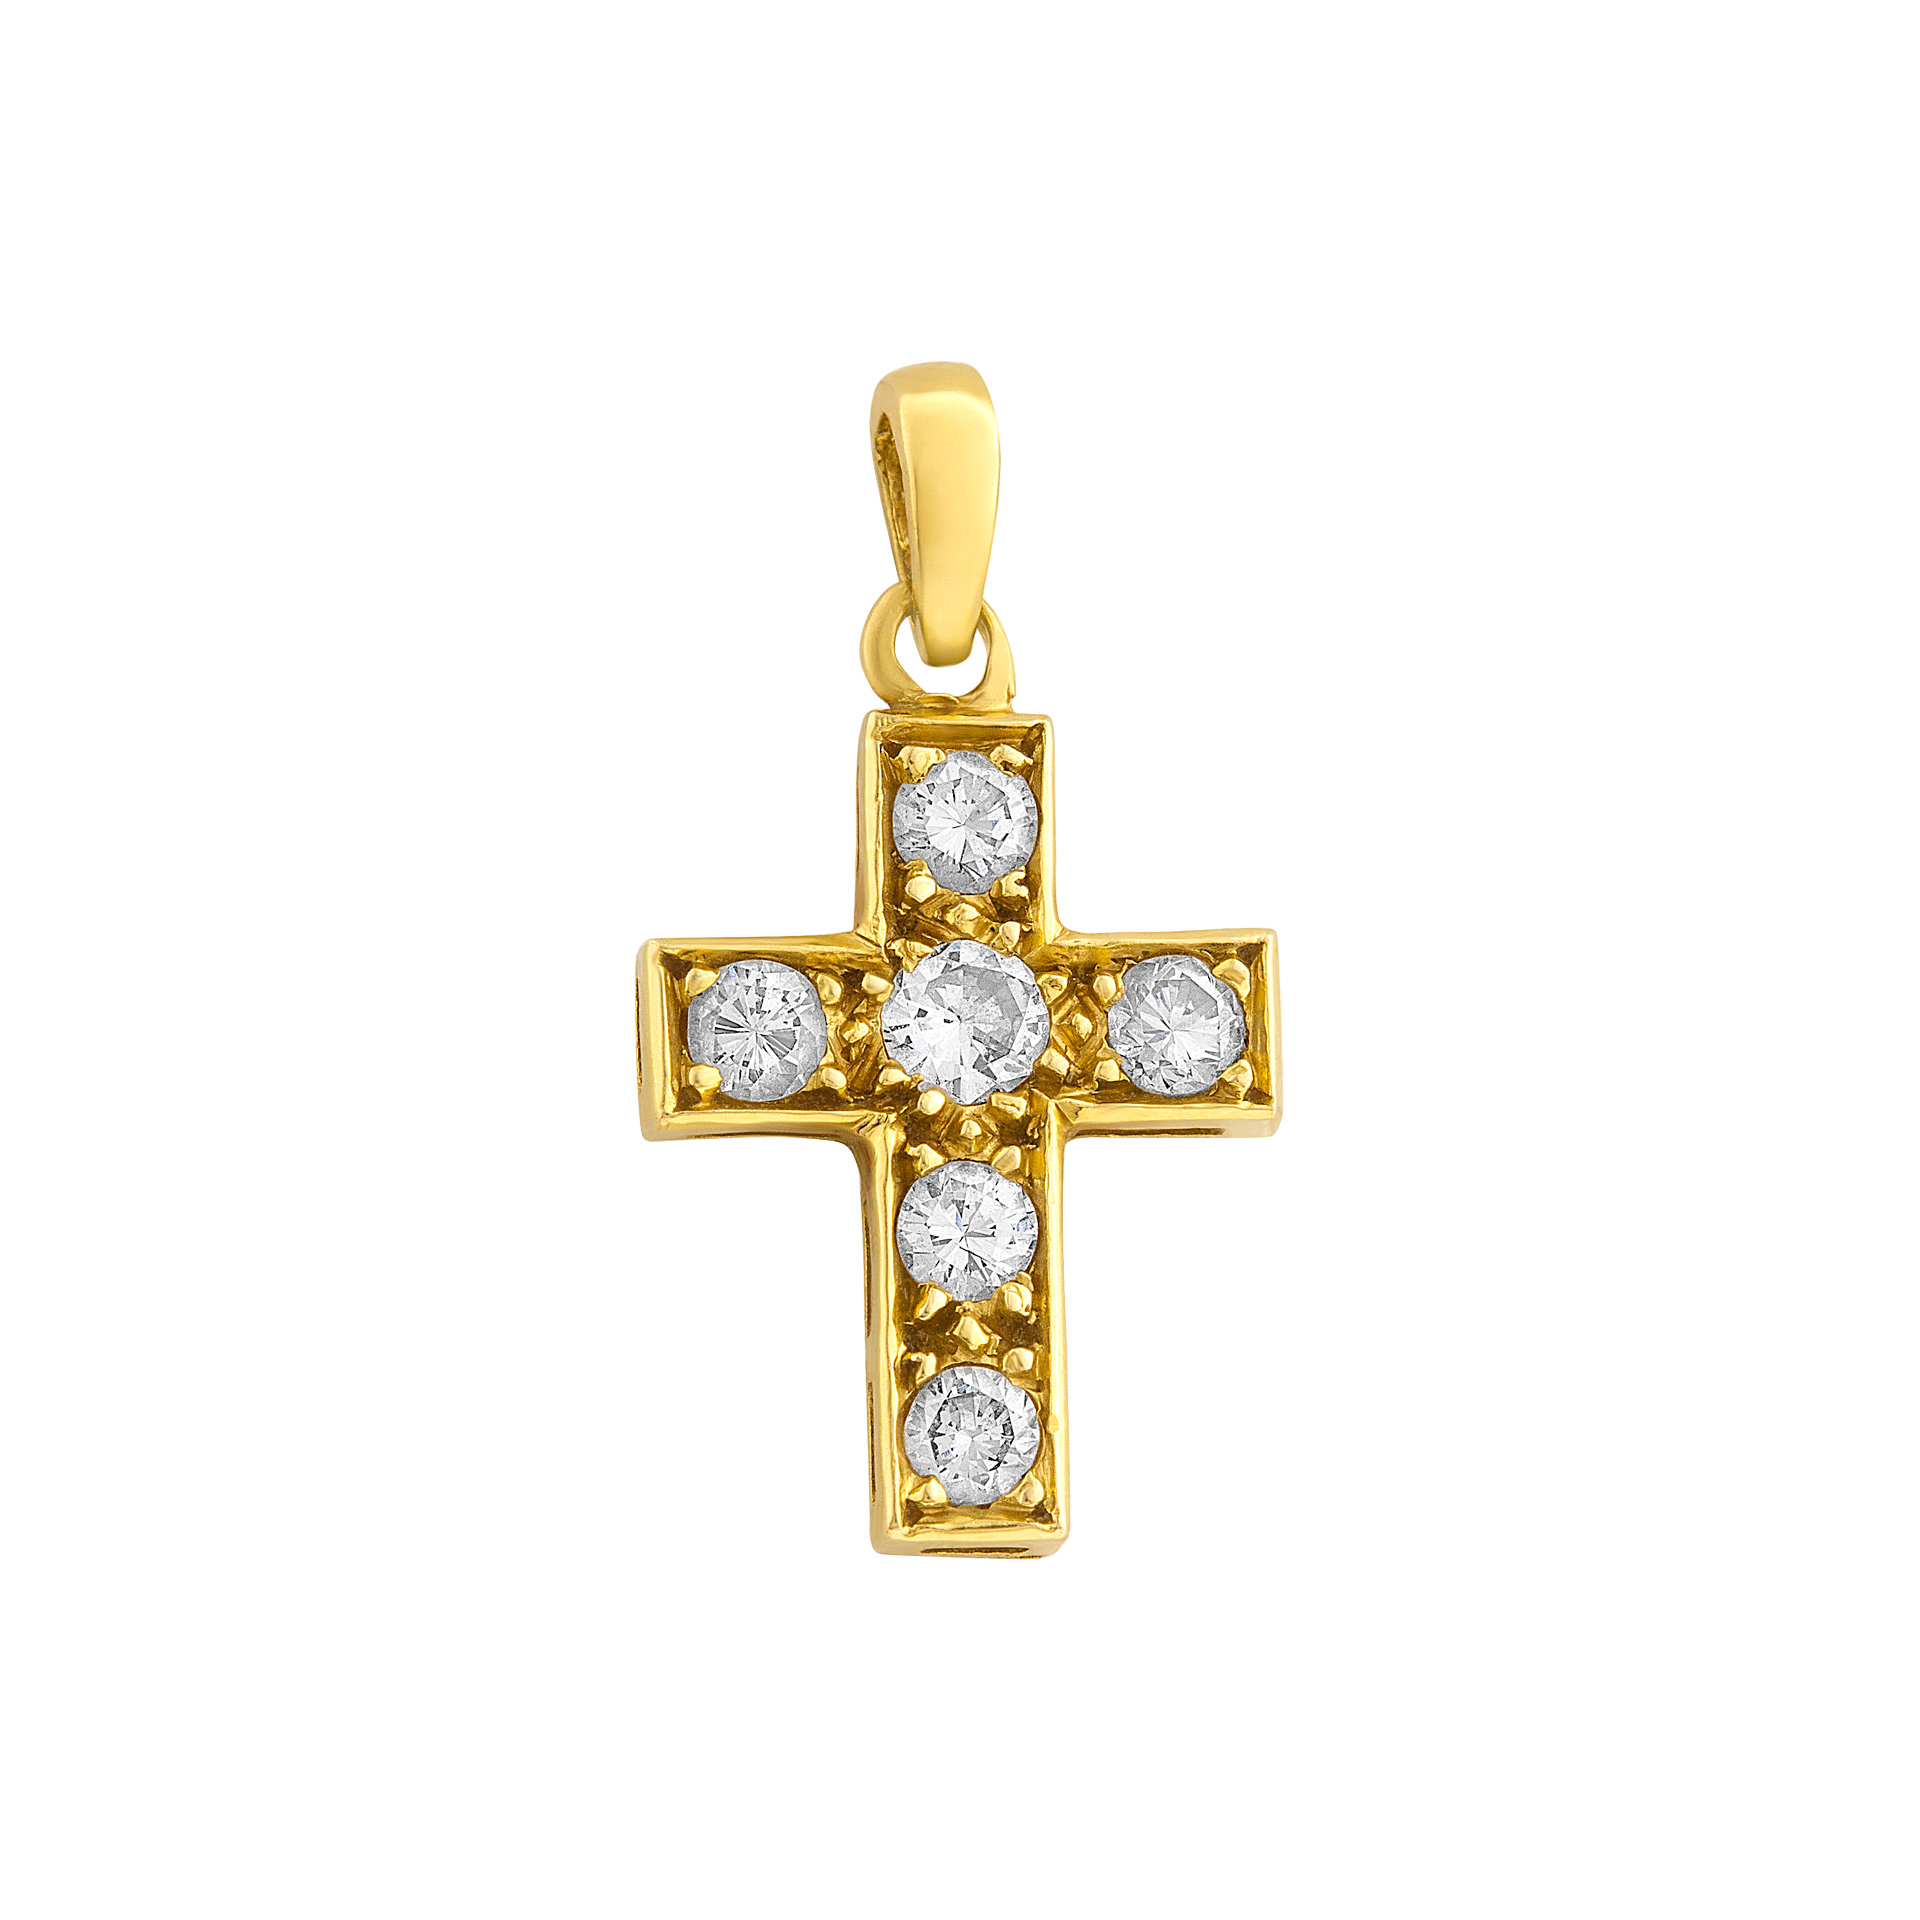 Classic Diamond Cross Pendant In 14k Yellow Gold. 0.35 carats in diamonds